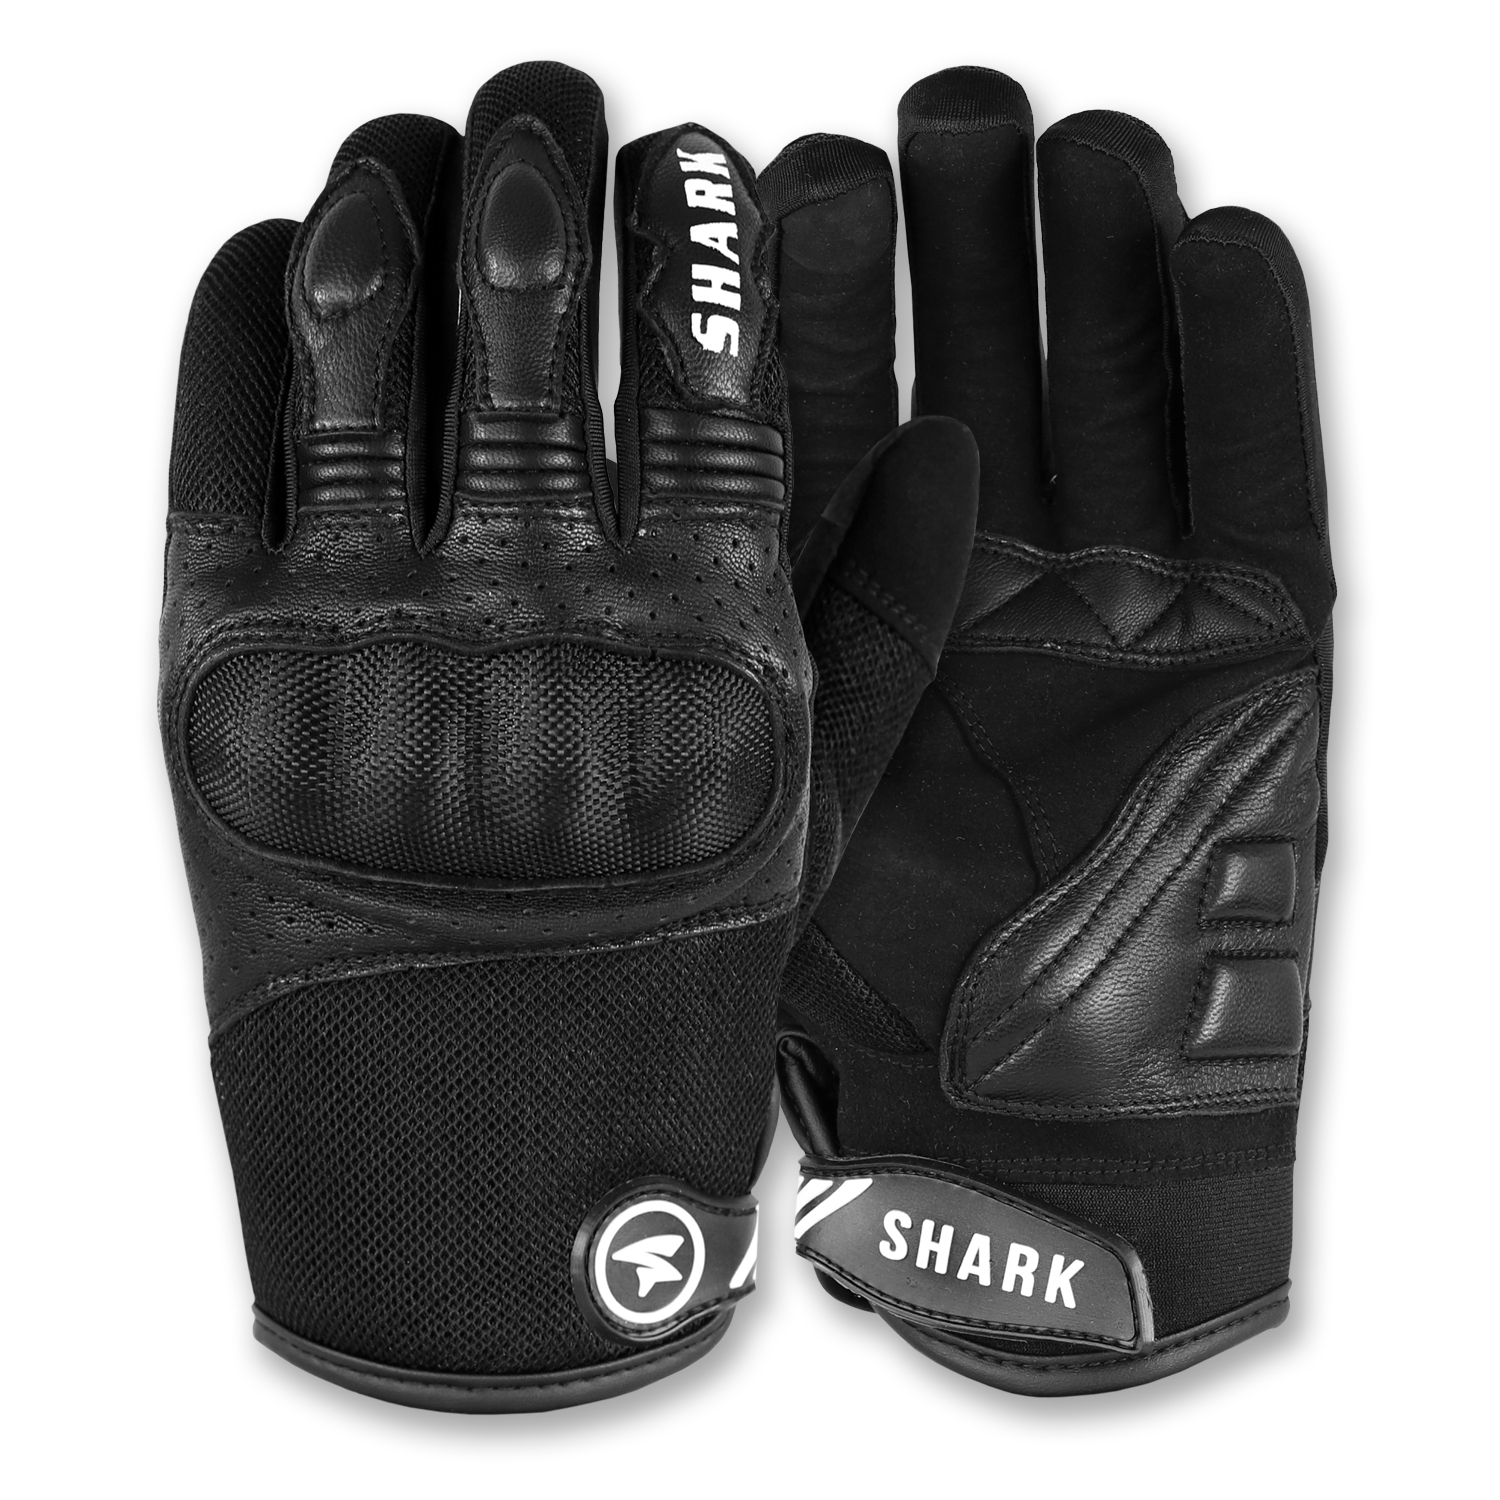 Shark Blast Summer Glove Black - Shark Leathers